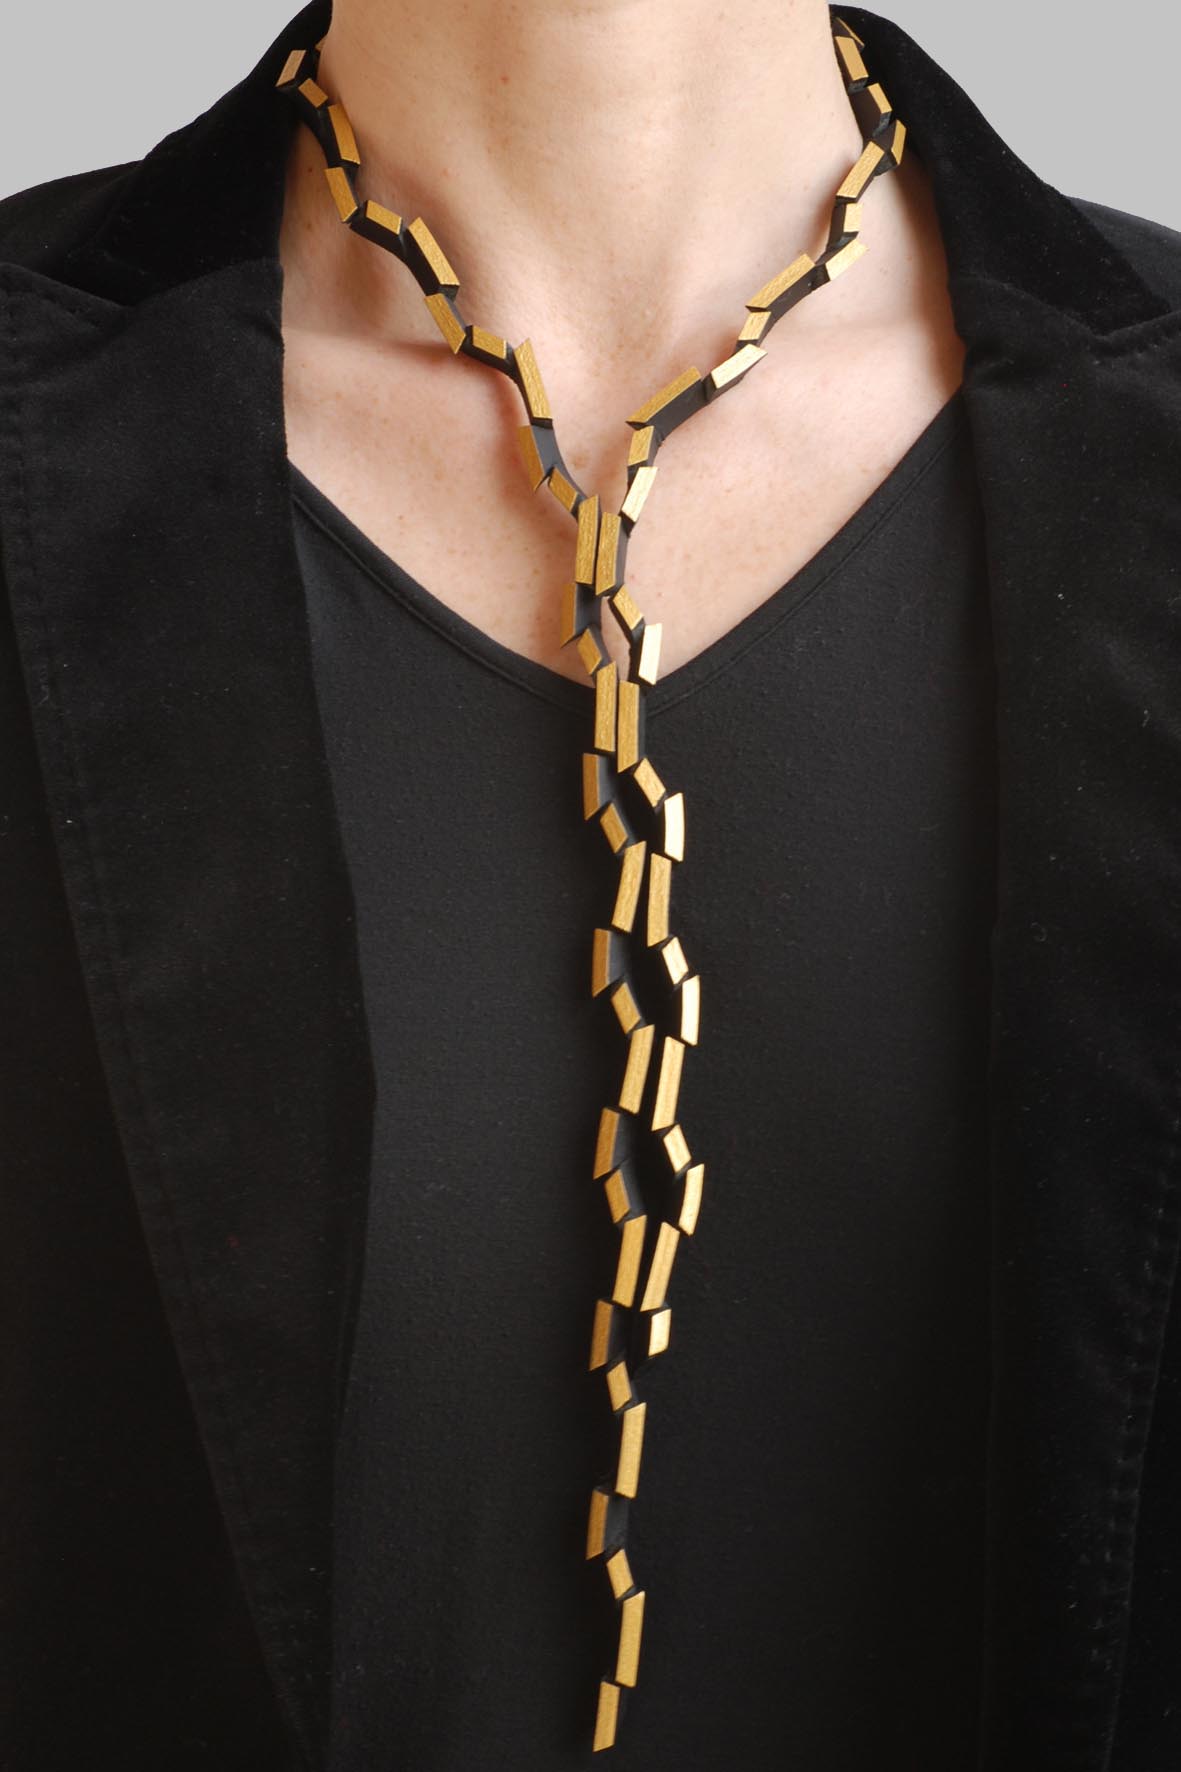 Out of Line Necklace - Black & Gold - modelled.jpg